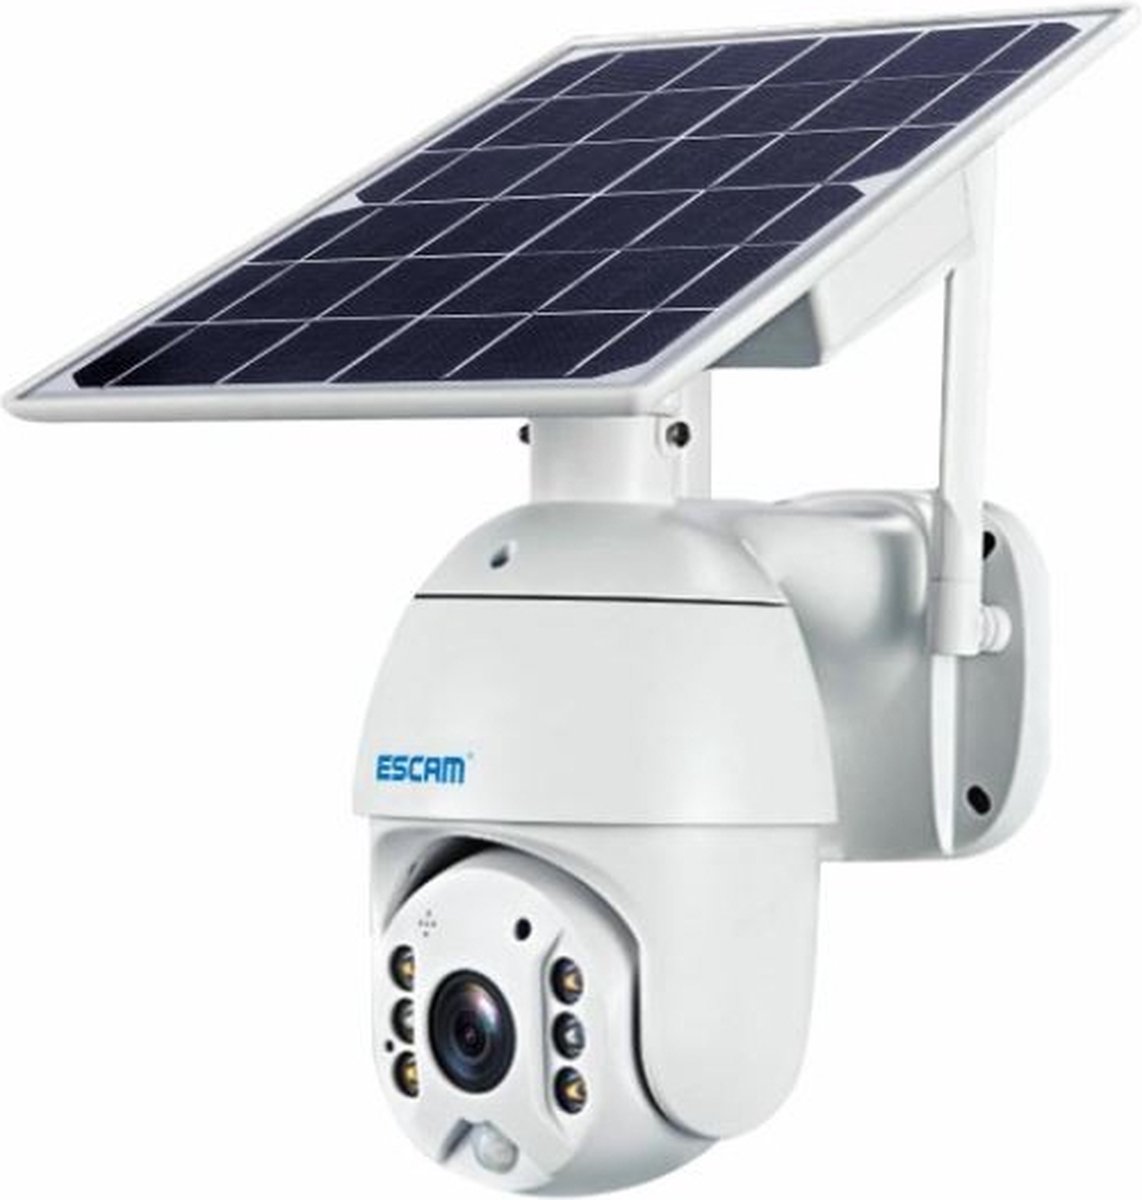 Beveiligingscamera op zonne-energie met nachtbeeld